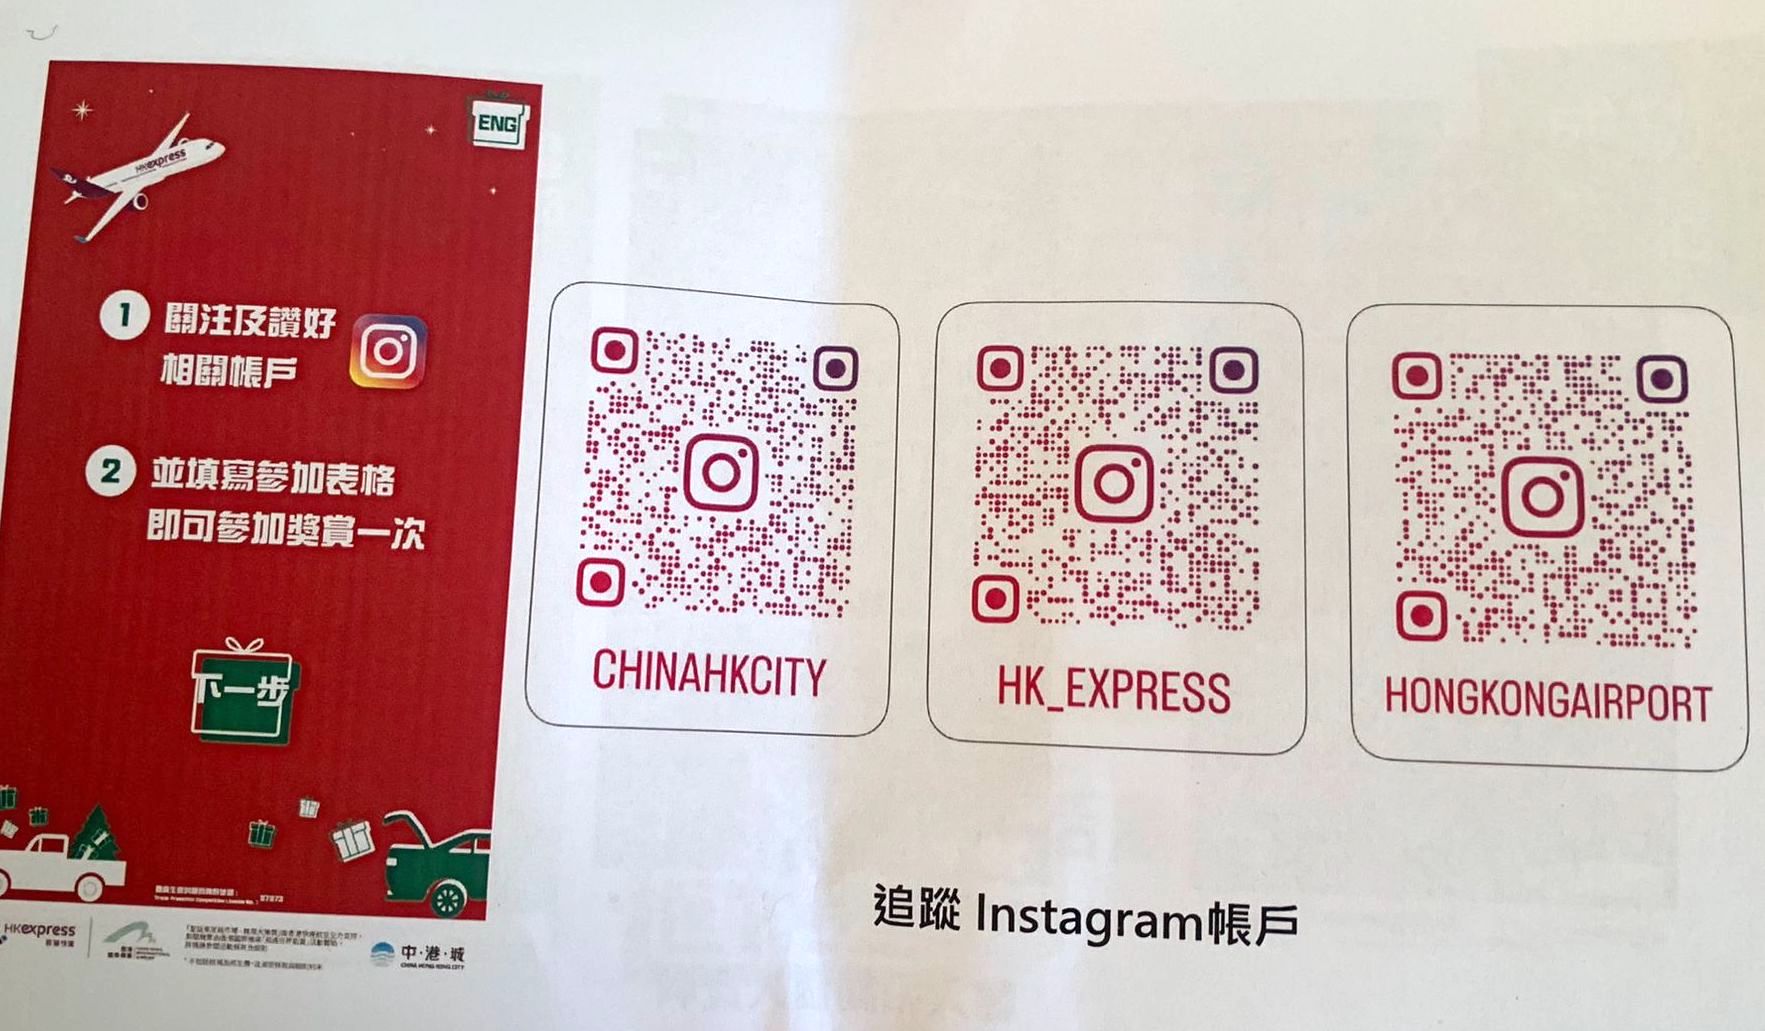 HK Express 免費機票丨 參加方法